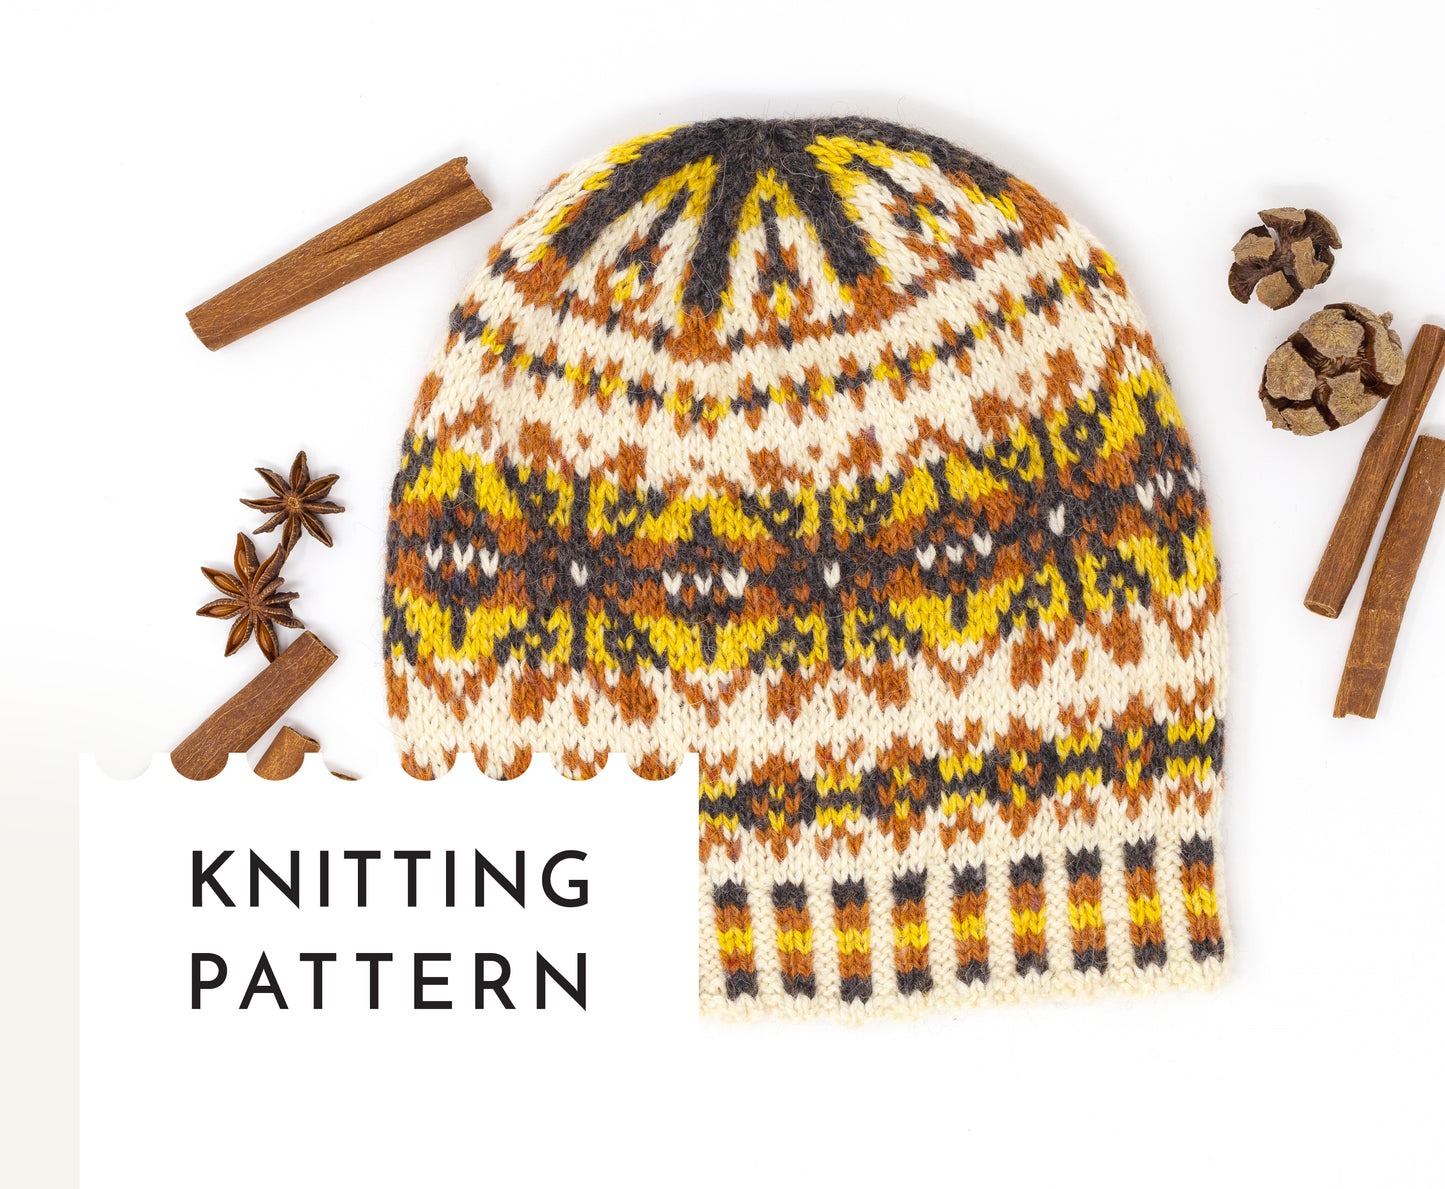 yellow, orange, black and white wool hand-knitted Fair Isle beanie hat